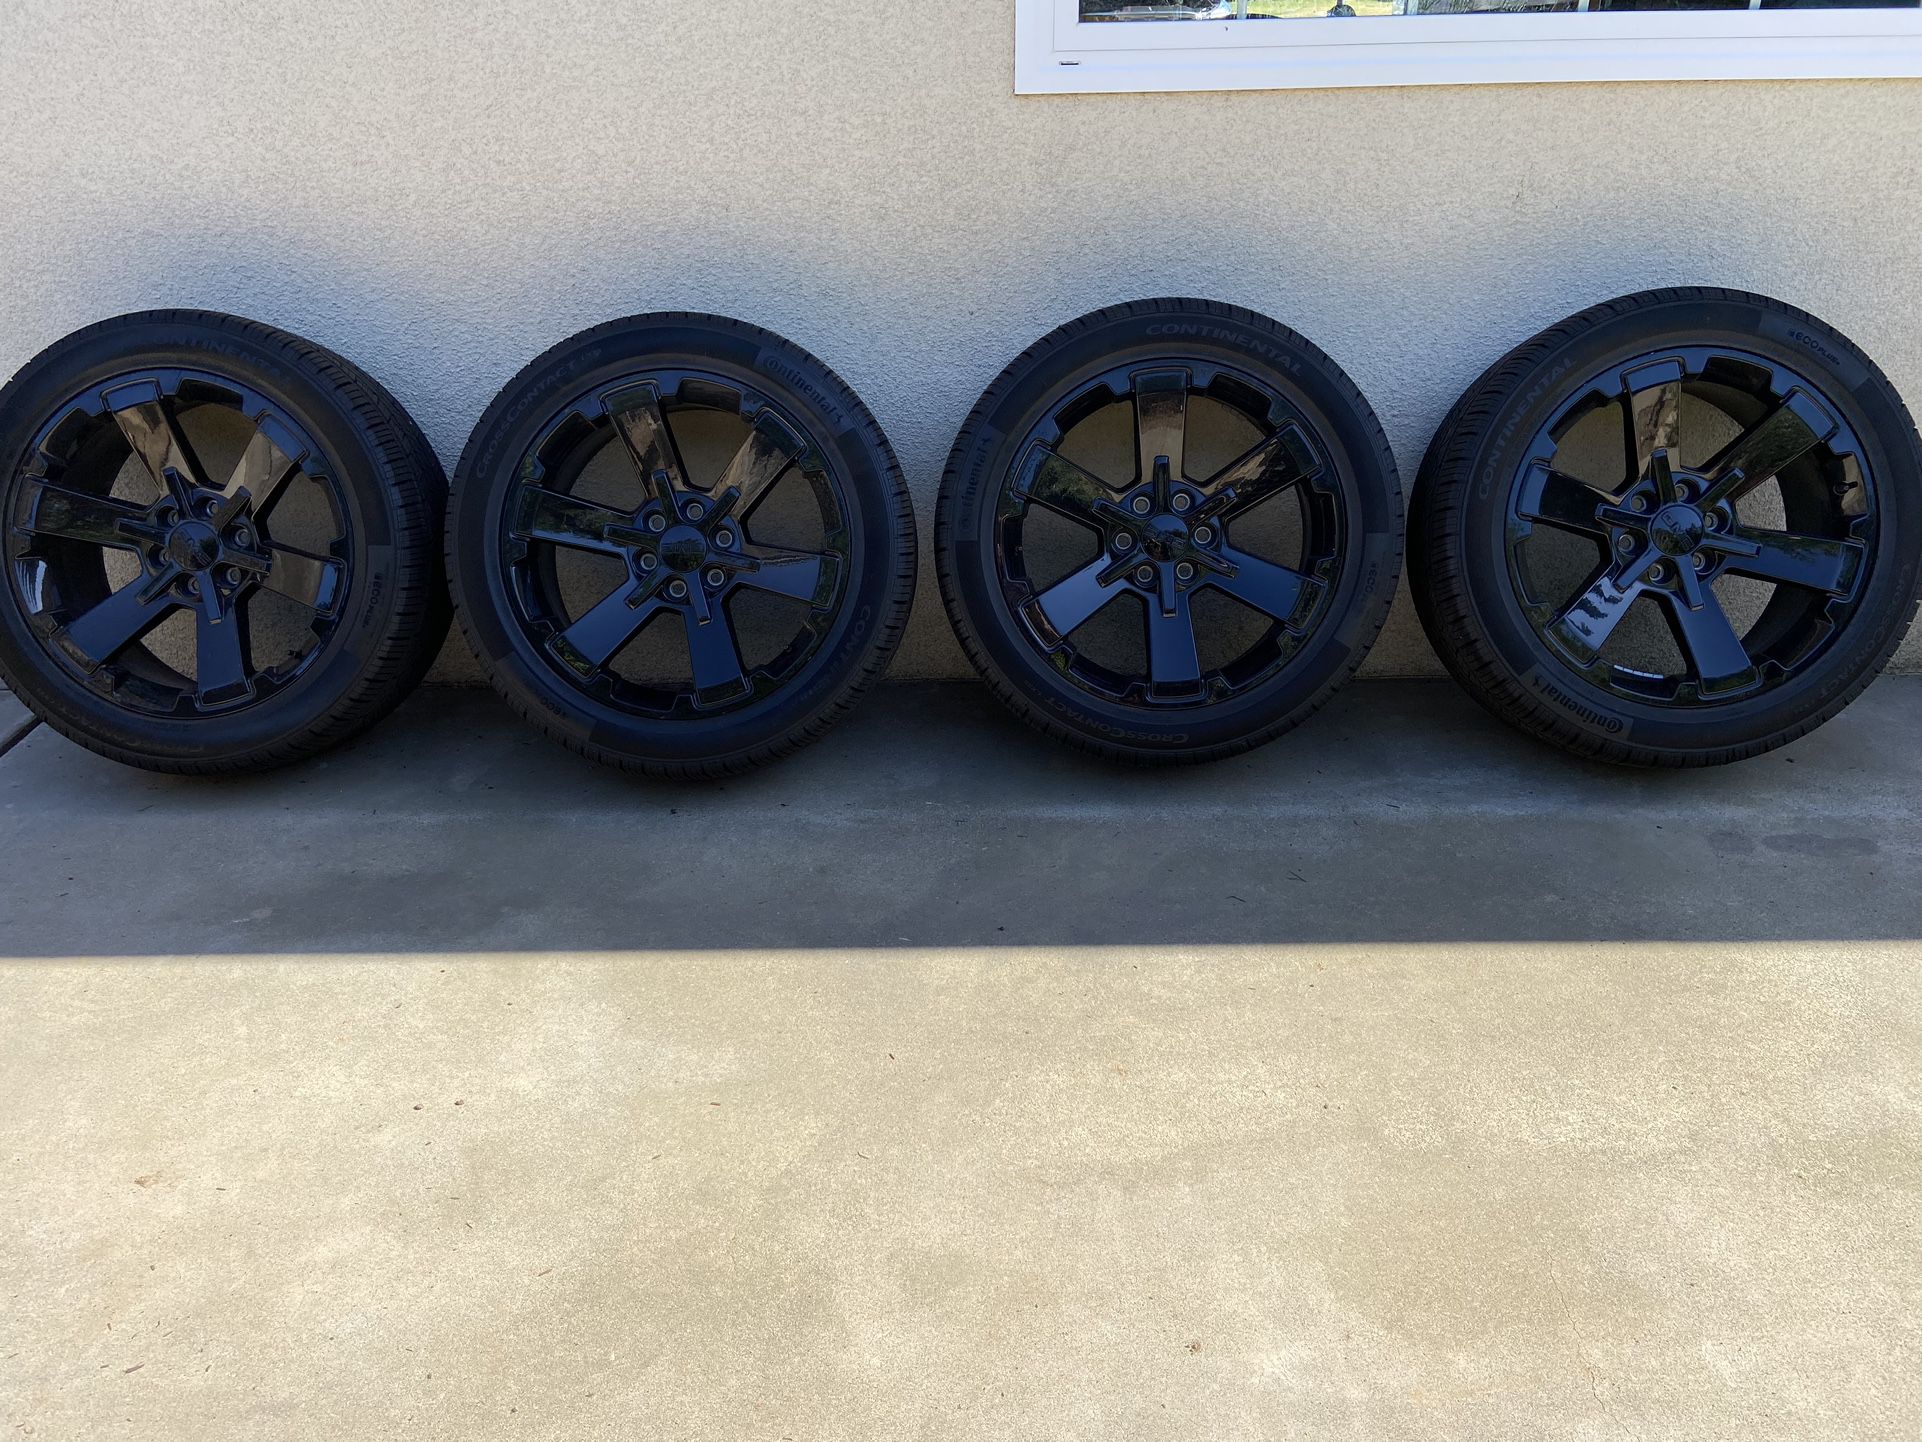 GMC Yukon Denali 22” Wheels with Brand New Tires